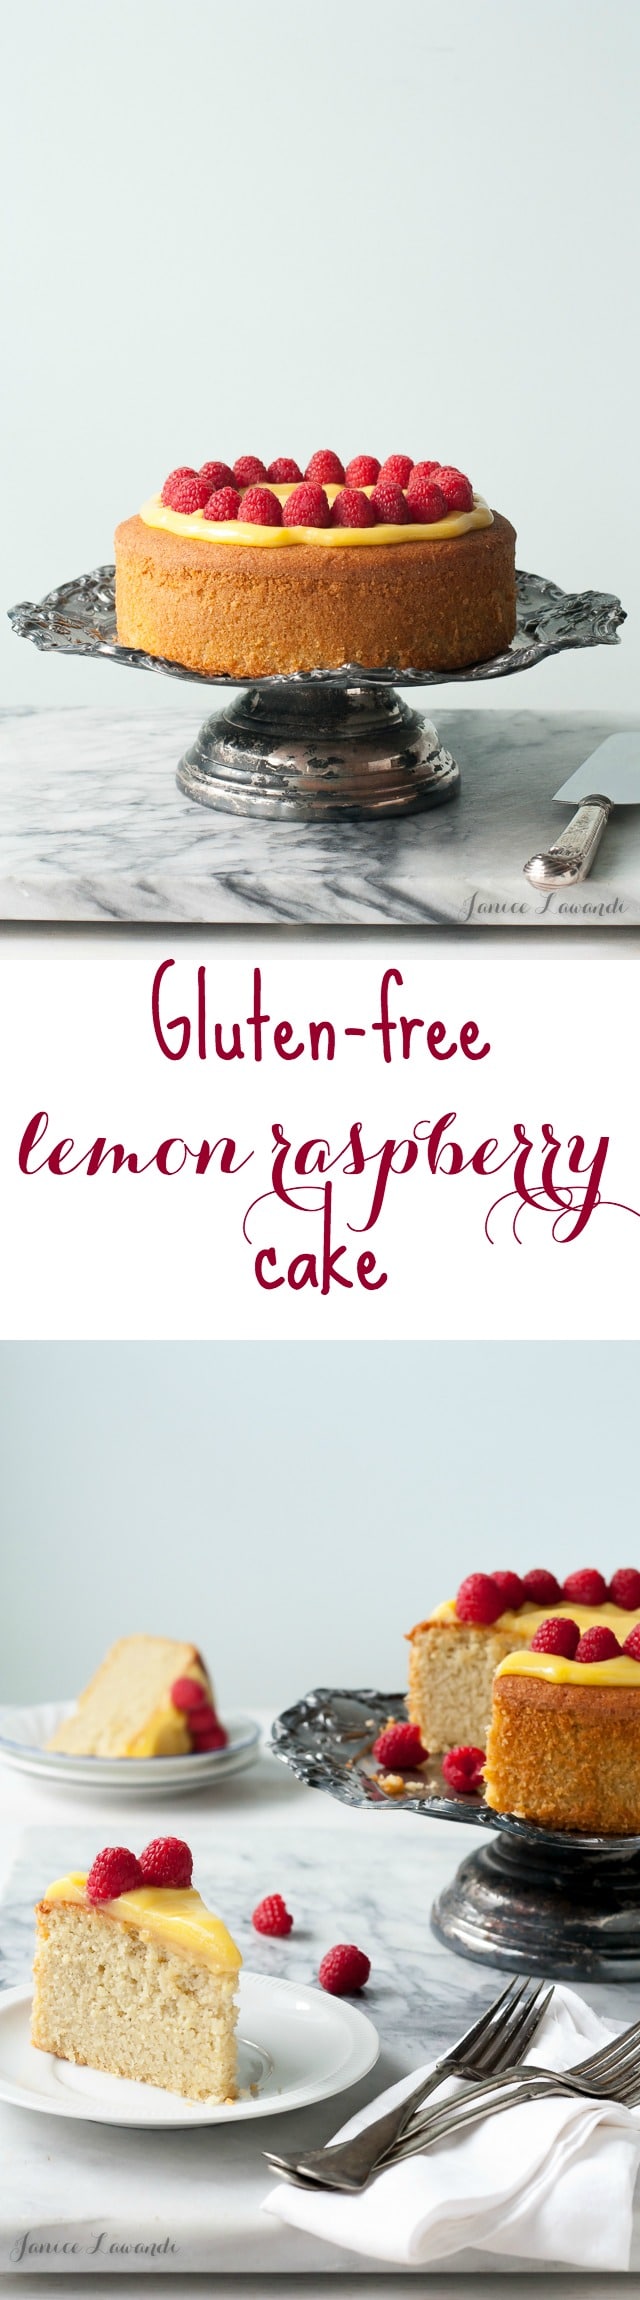 Gluten-Free lemon raspberry cake